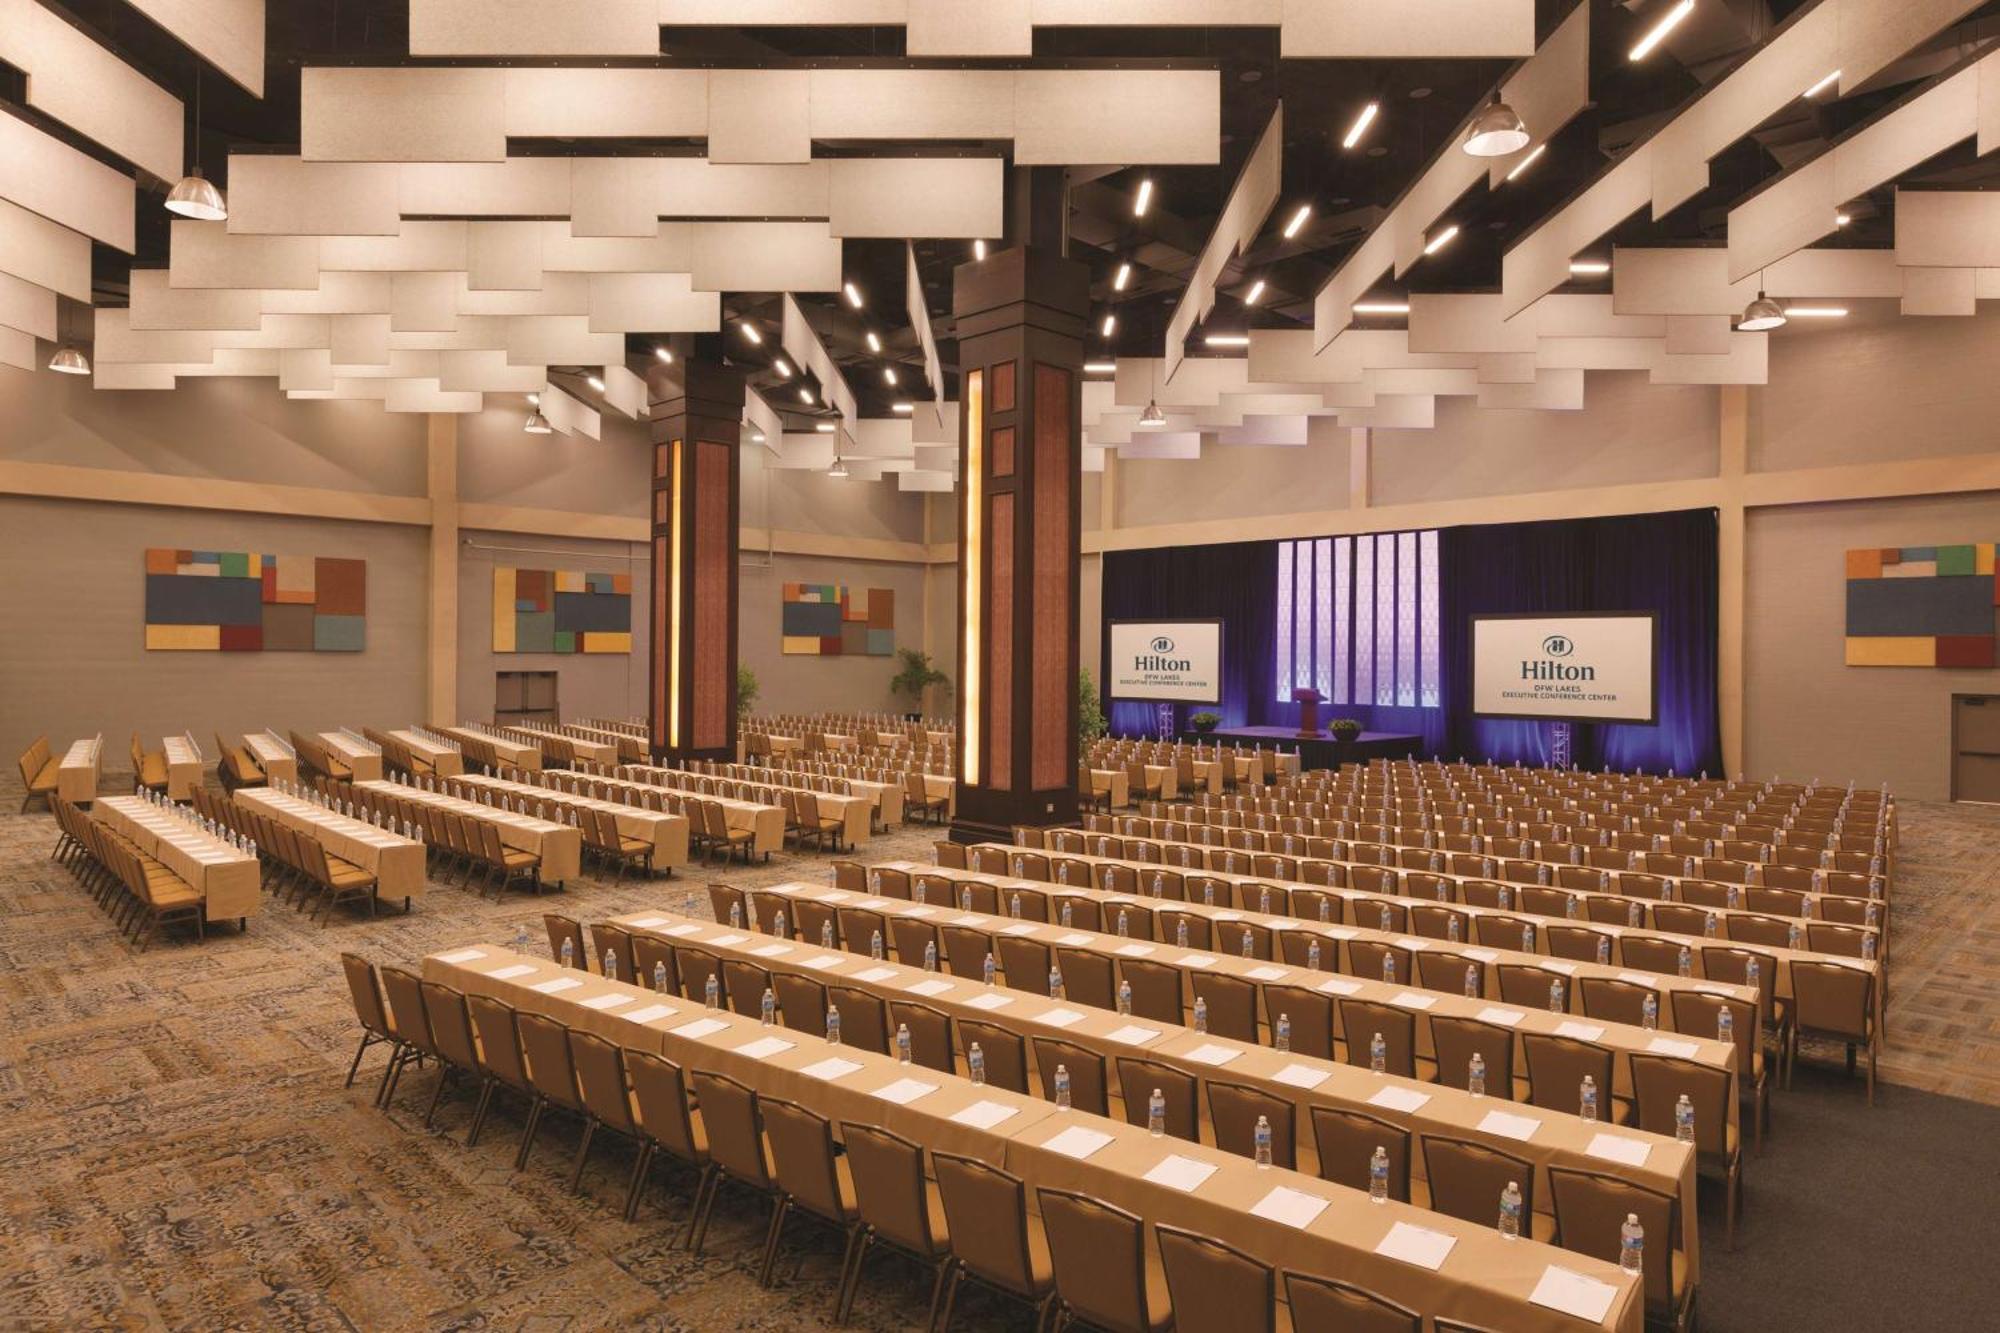 Hilton Dfw Lakes Executive Conference Center Grapevine Bagian luar foto